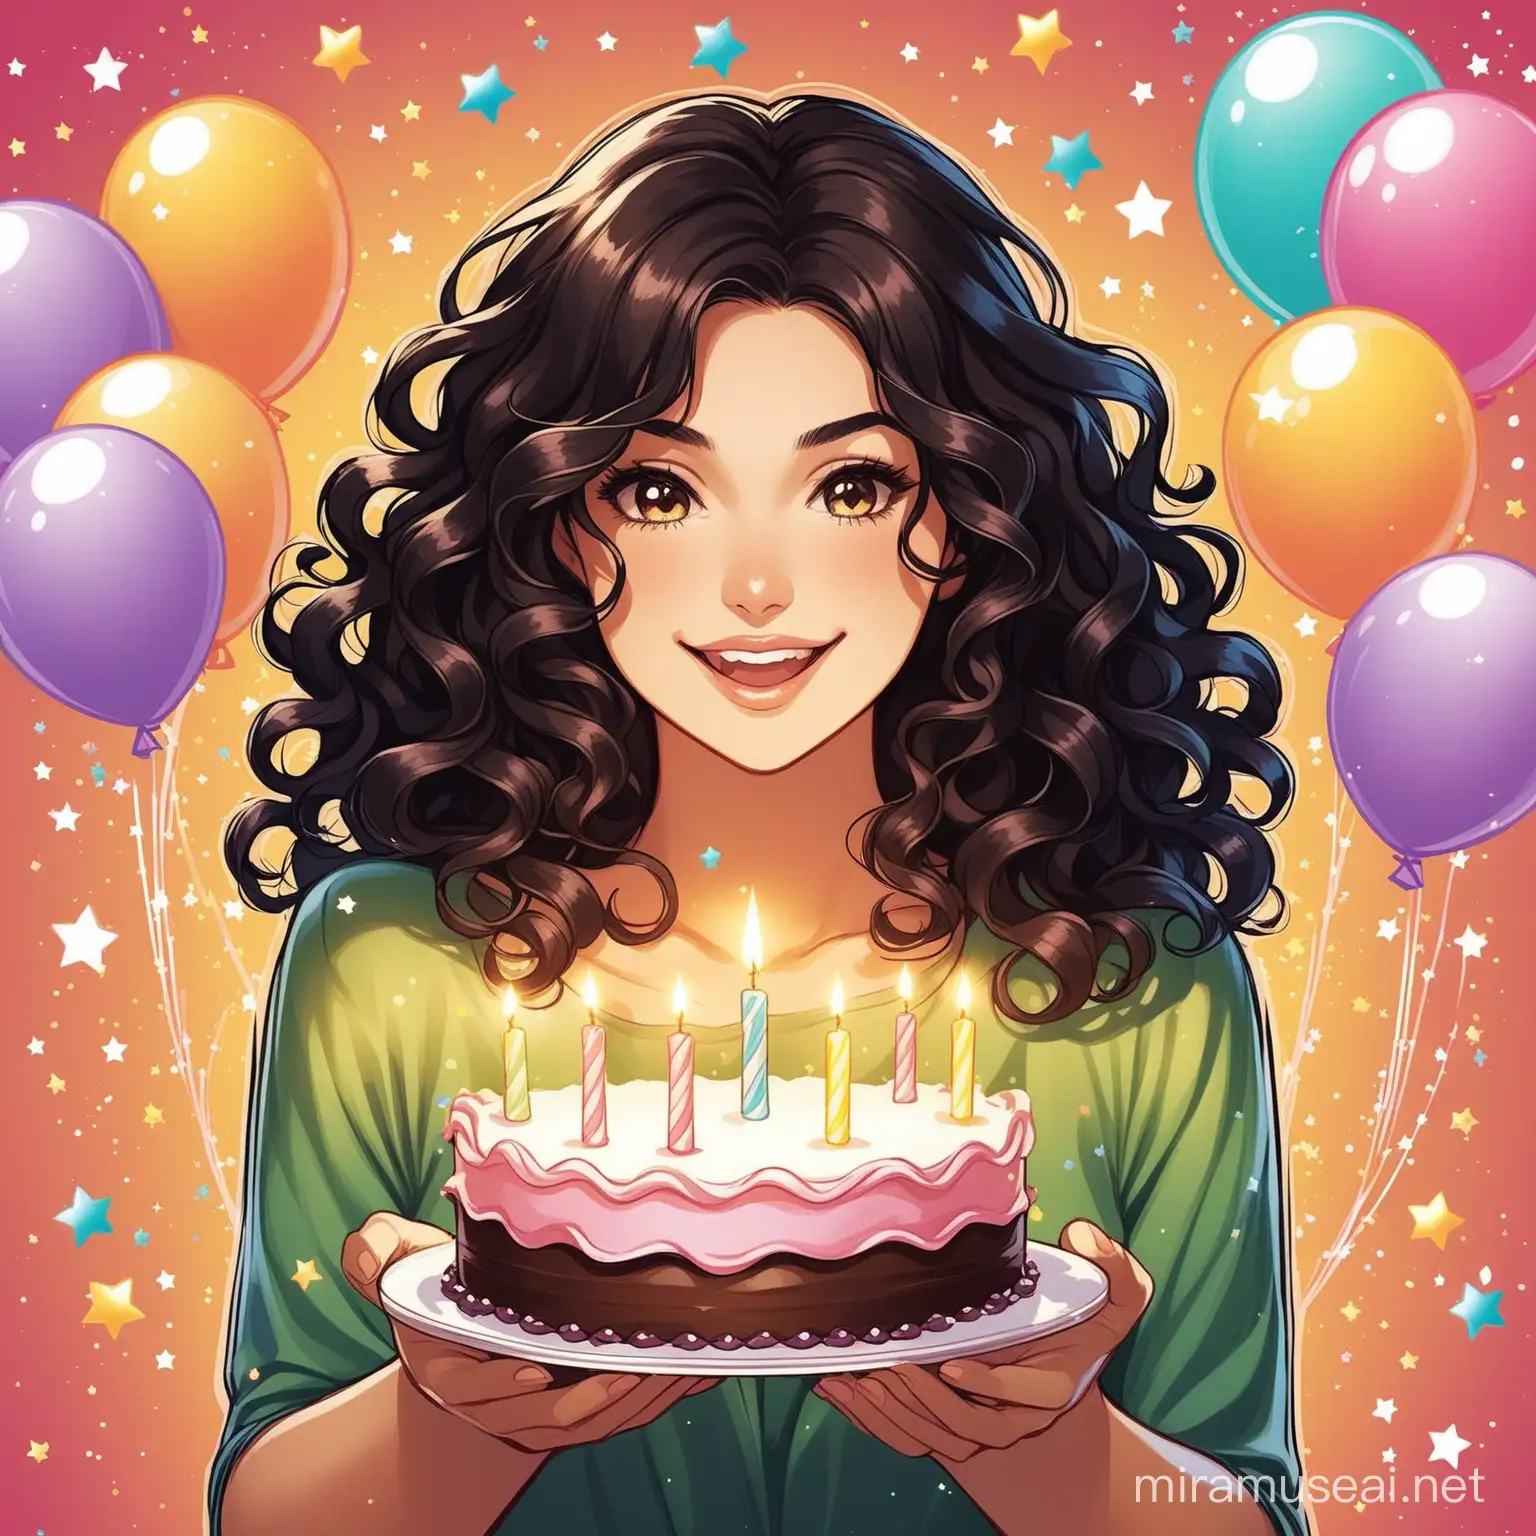 CurlyHaired Woman Celebrating Birthday with Dark Hair